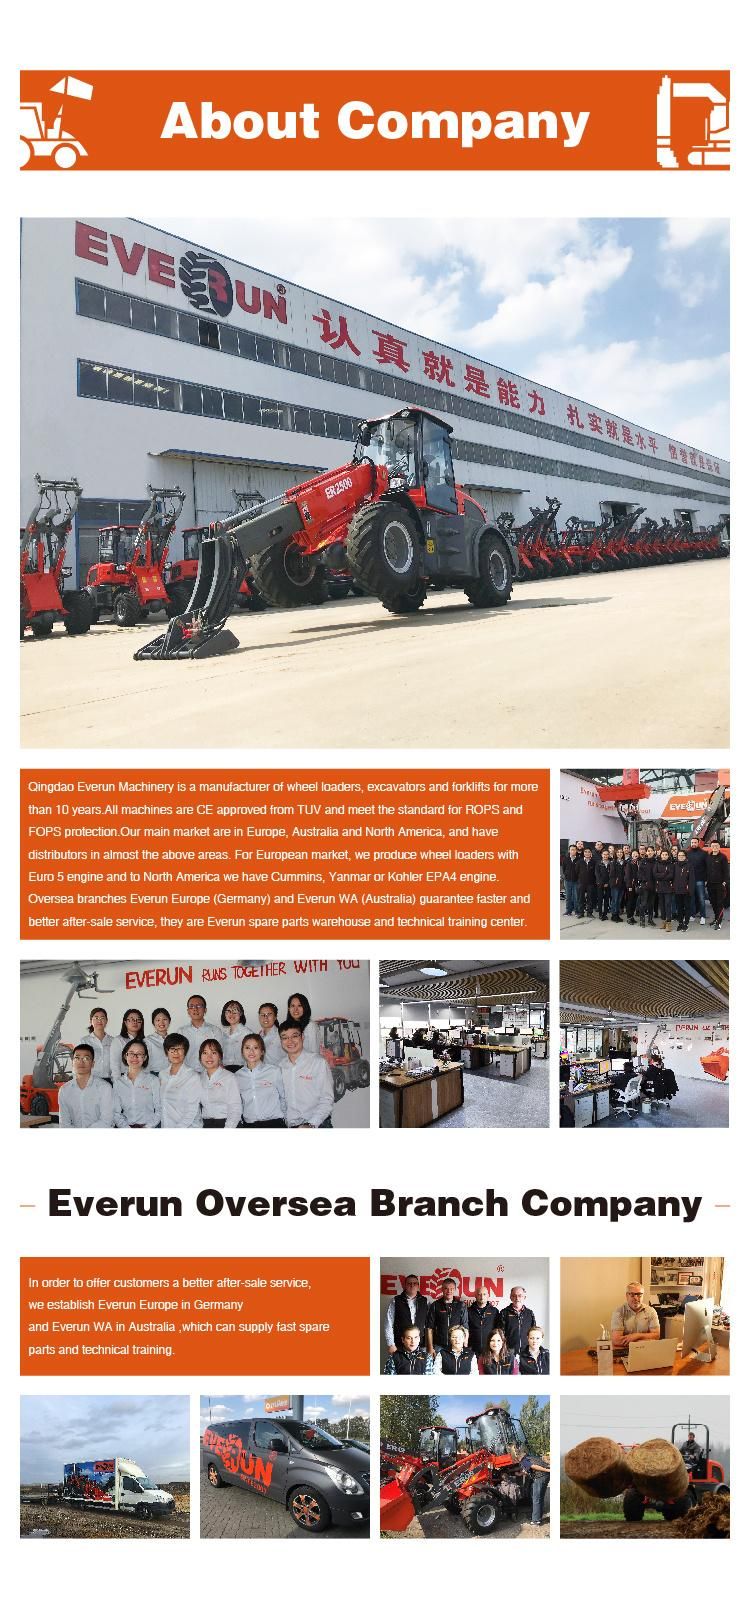 New Arrive Everun EREF750 750kg Construction Machine Electric/Battery Forklift for Sale